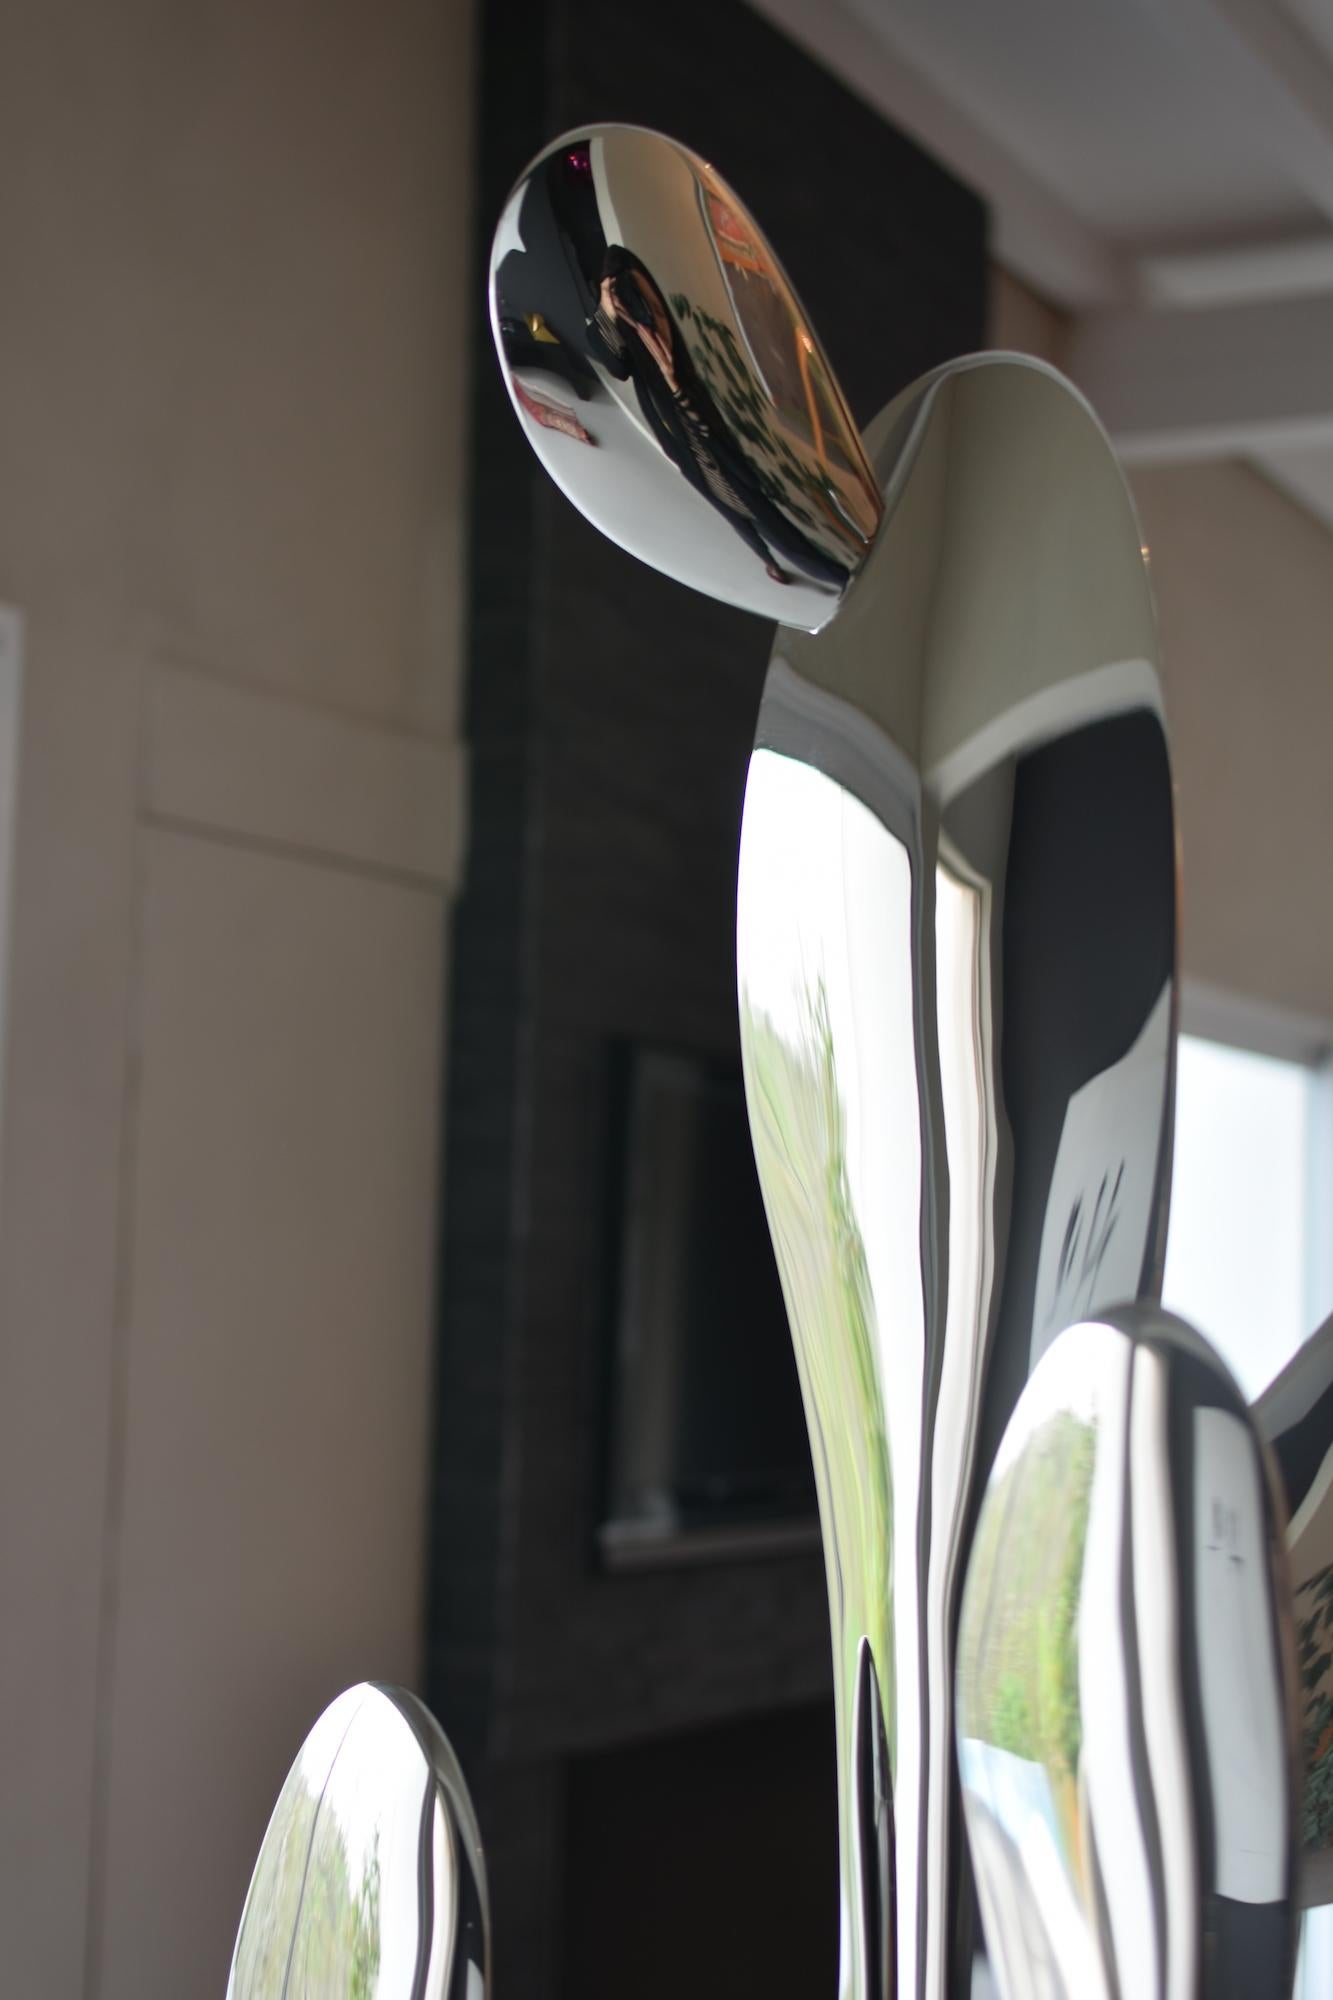 Kaktus by Franck K - Stainless steel sculpture, reflections, light, vision For Sale 5